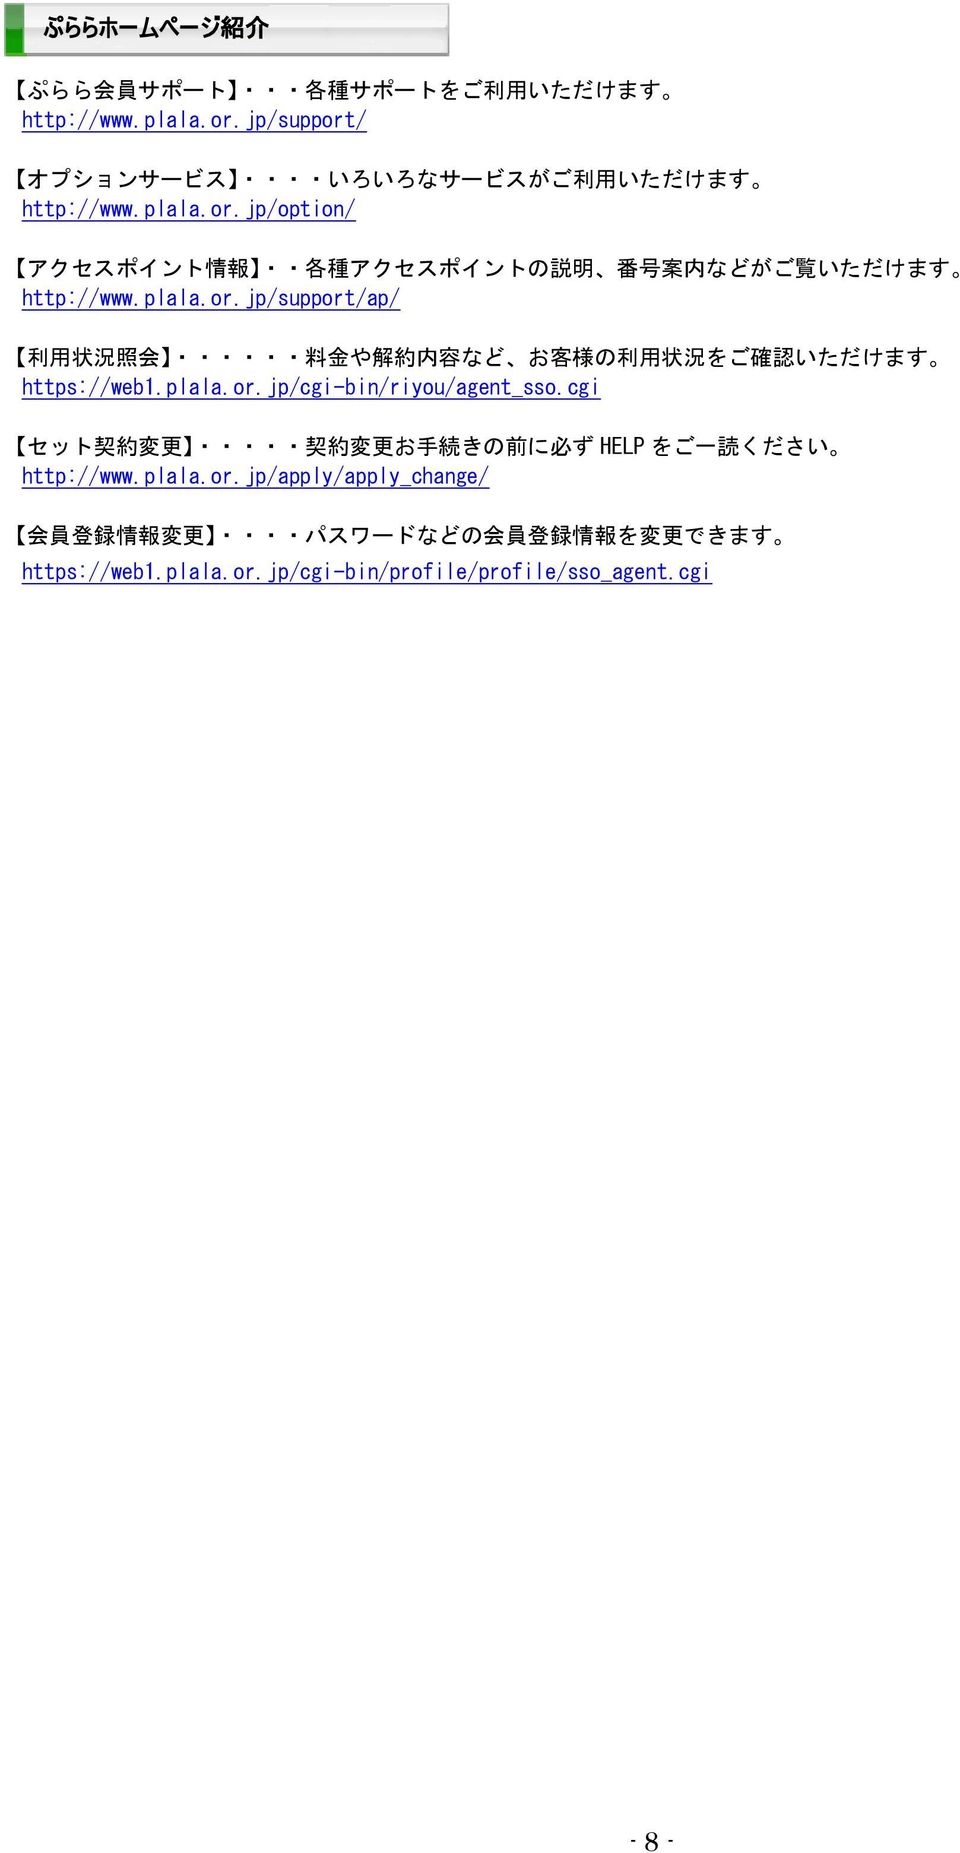 plala.or.jp/support/ap/ 利 用 状 況 照 会 料 金 や 解 約 内 容 など お 客 様 の 利 用 状 況 をご 確 認 いただけます https://web1.plala.or.jp/cgi-bin/riyou/agent_sso.